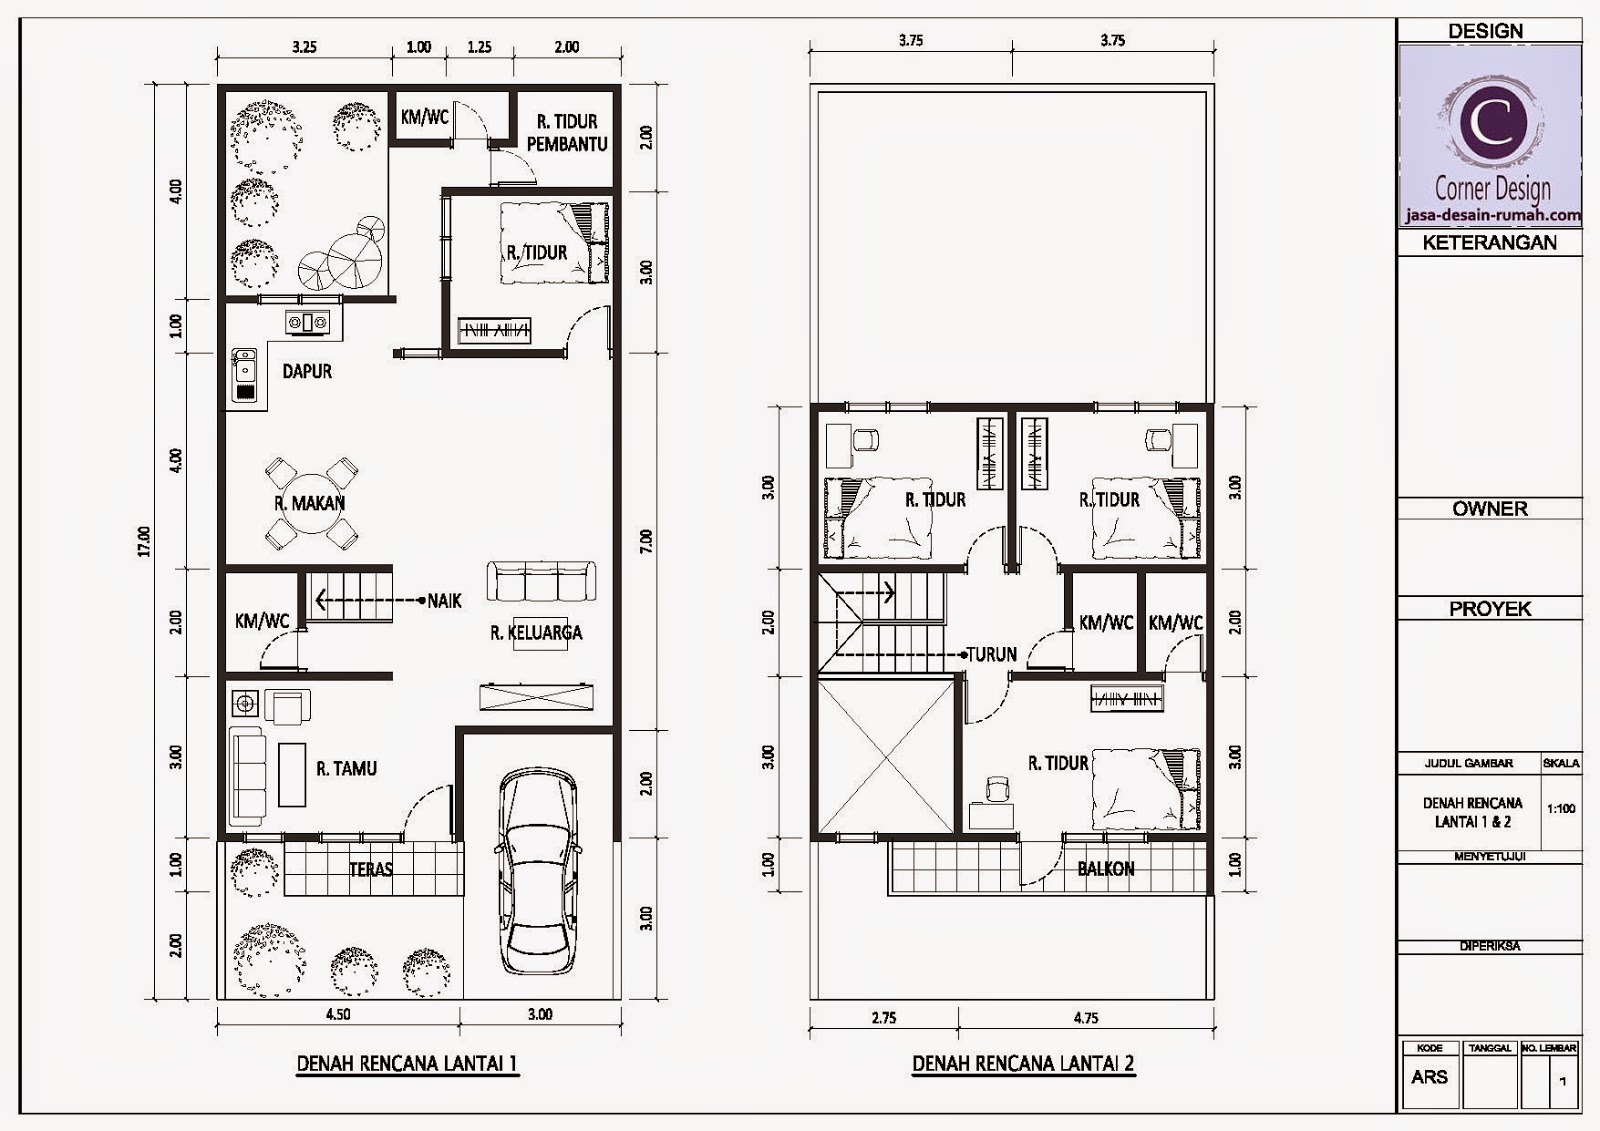 Rancangan Denah  Rumah Kontrakan  Ukuran 3x5  Denahose